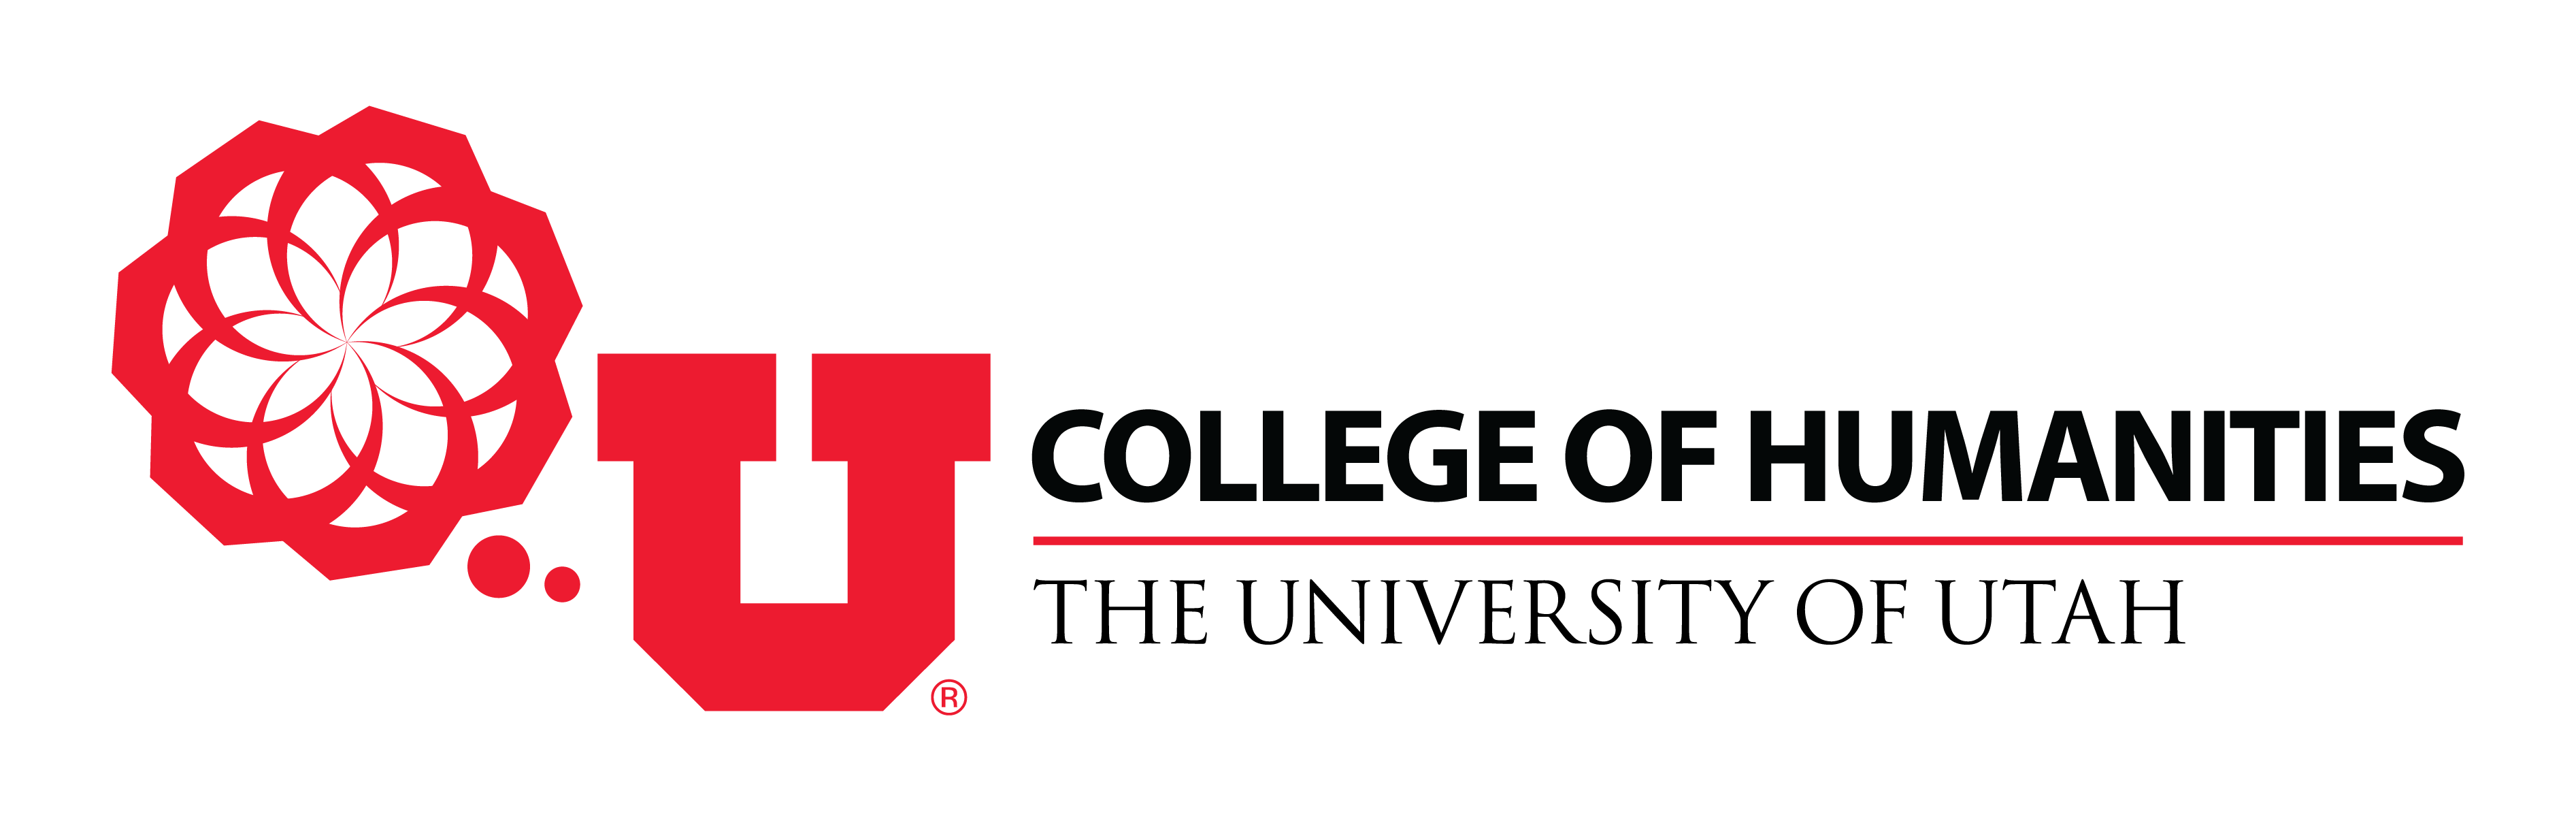 U college of humanities Logo Red